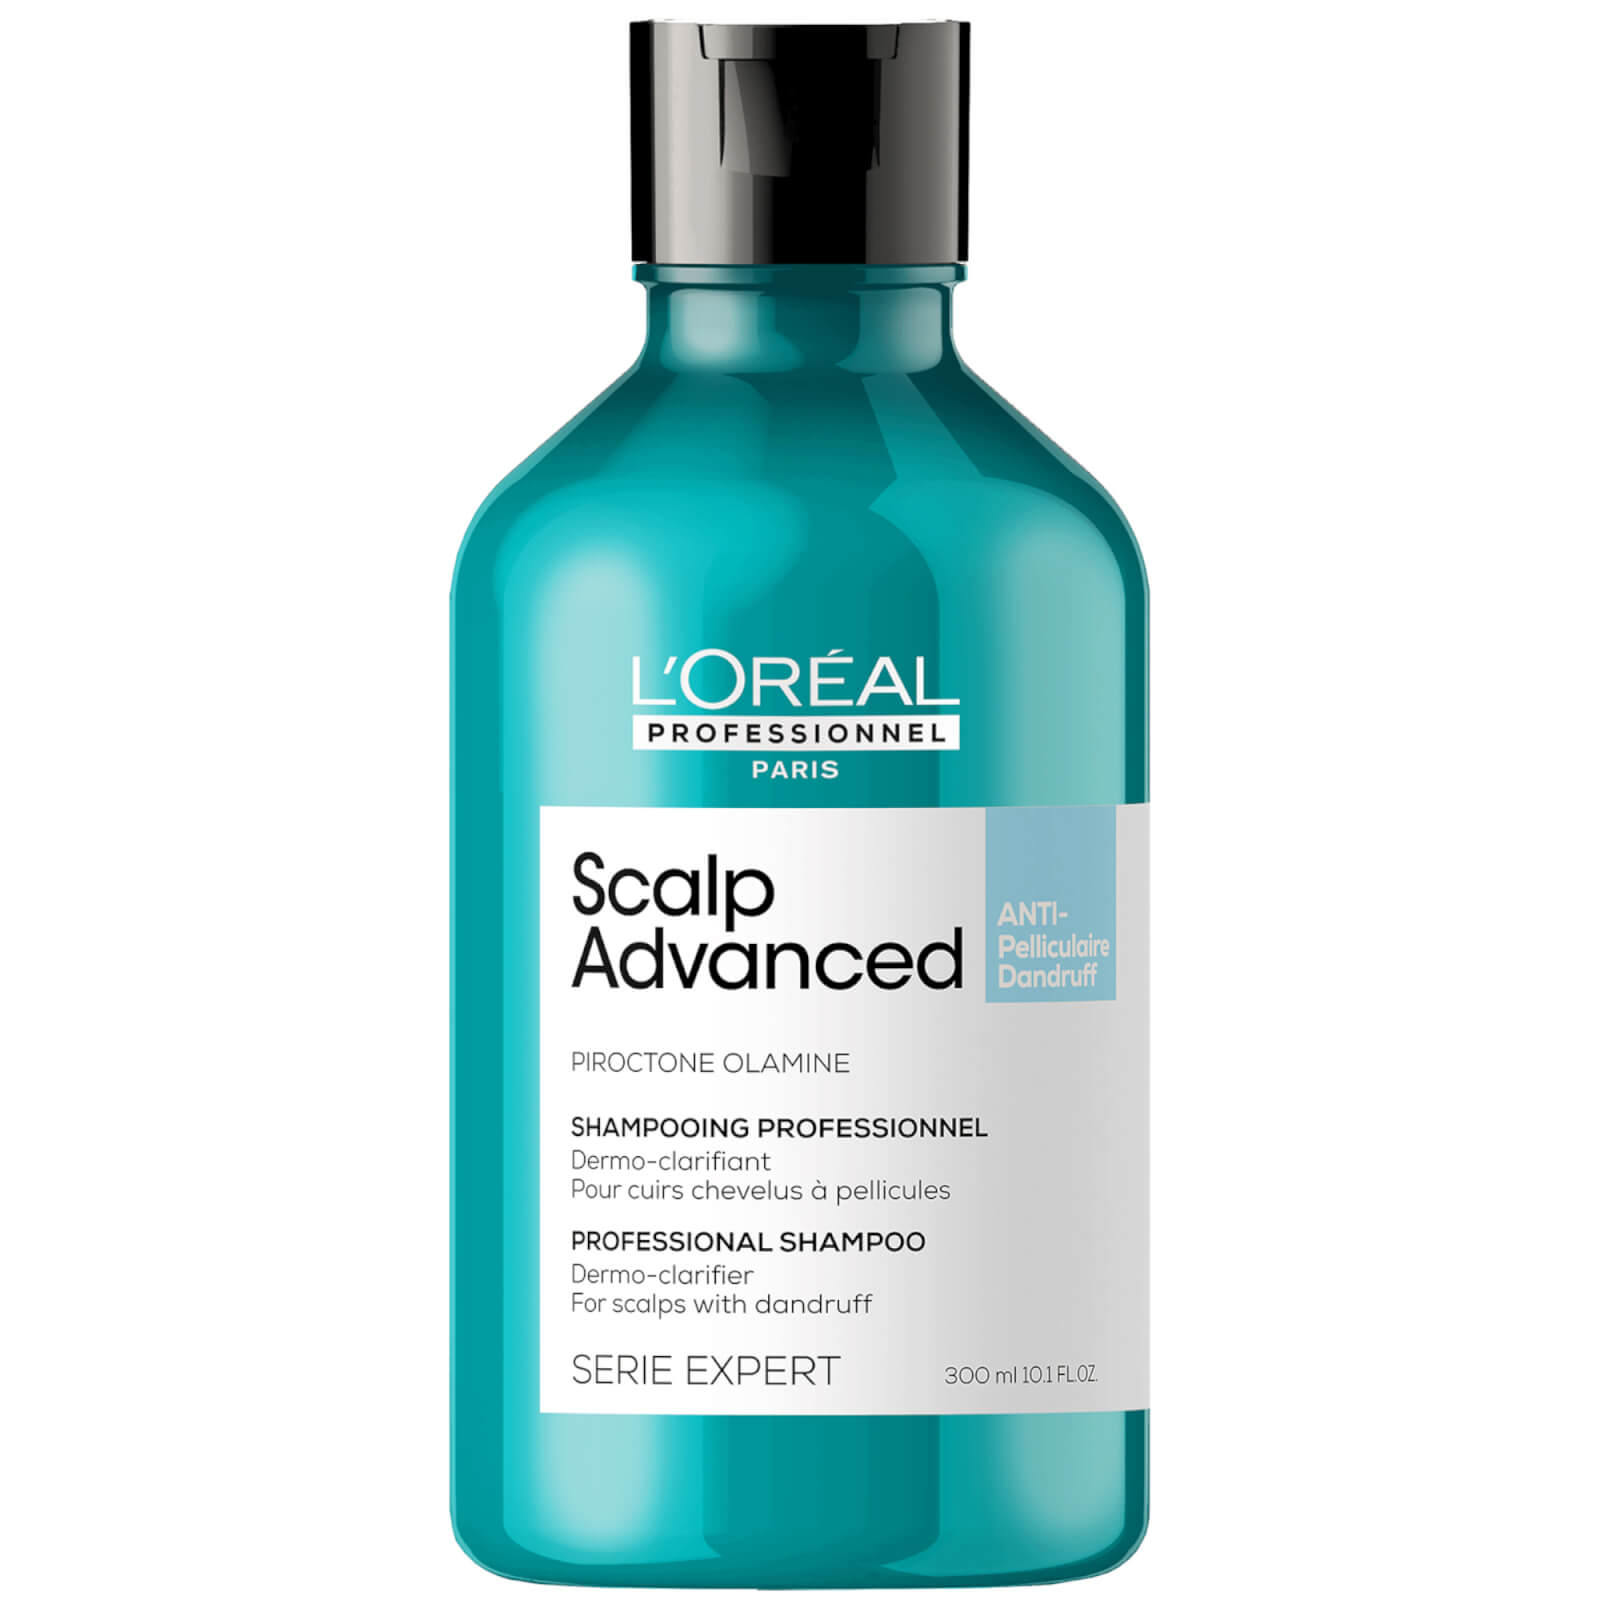 L'oreal Professionnel Serié Expert Scalp Advanced Anti-dandruff Dermo-clarifier Shampoo 300ml